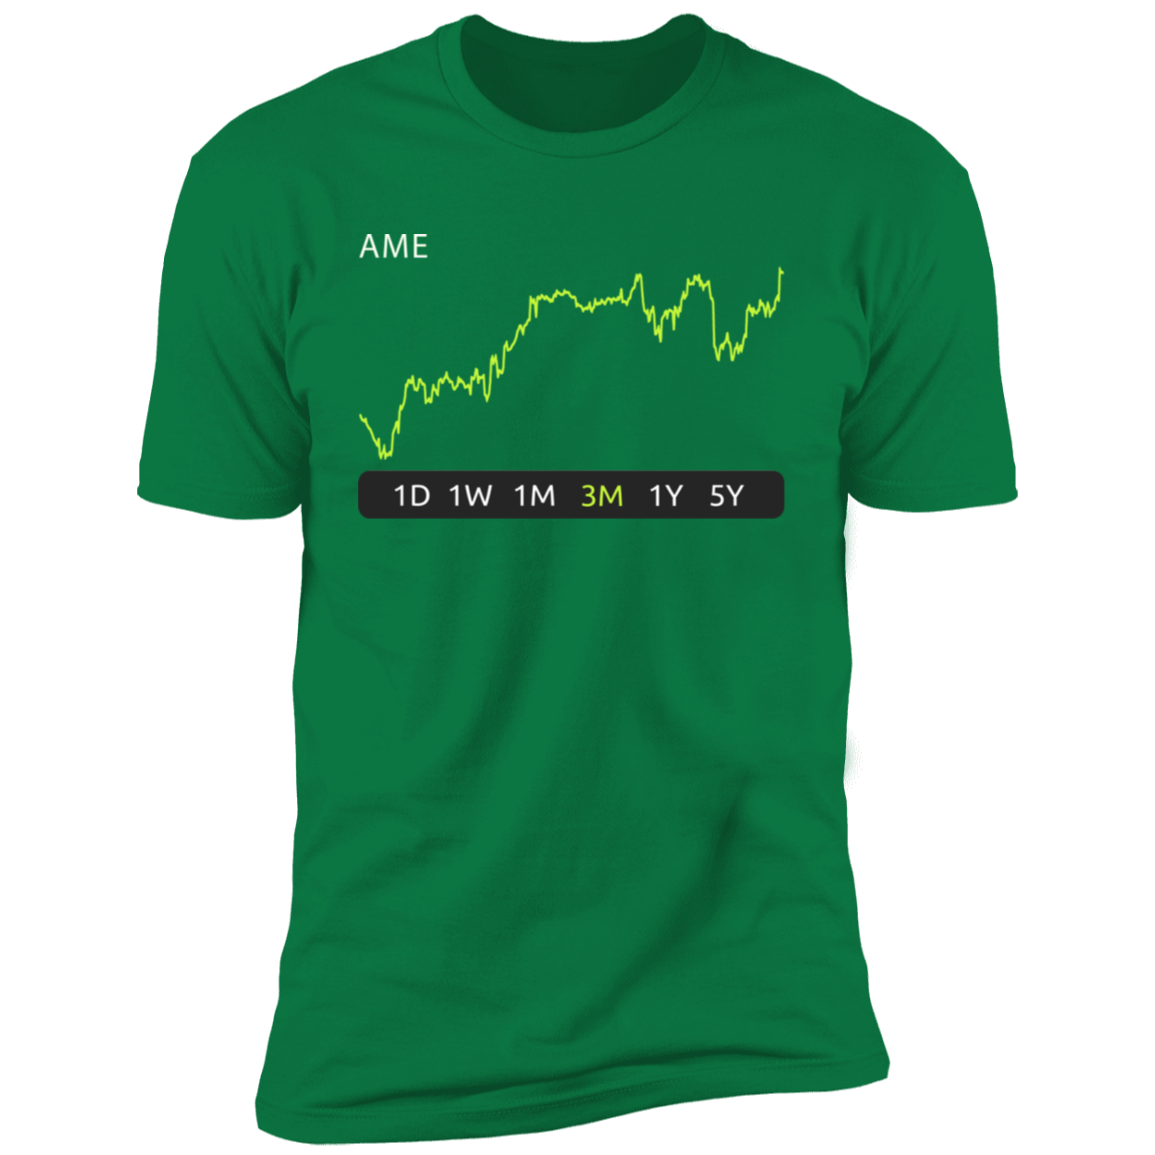 AME Stock 3m Premium T-Shirt